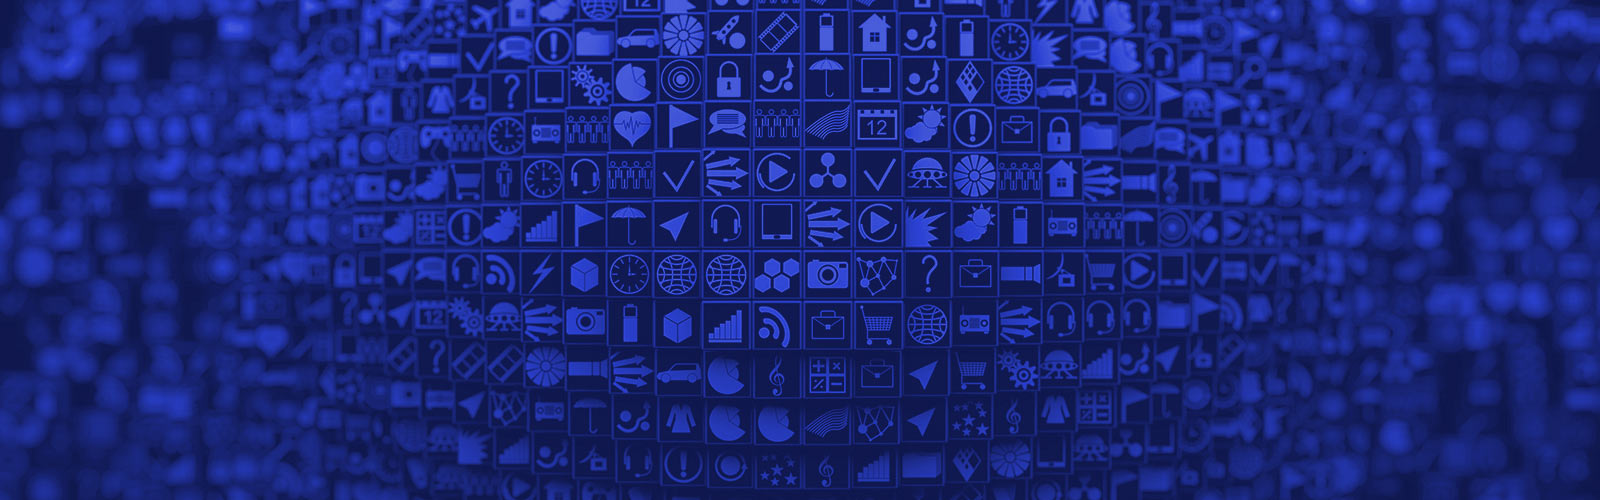 Many symbols representing various data points.